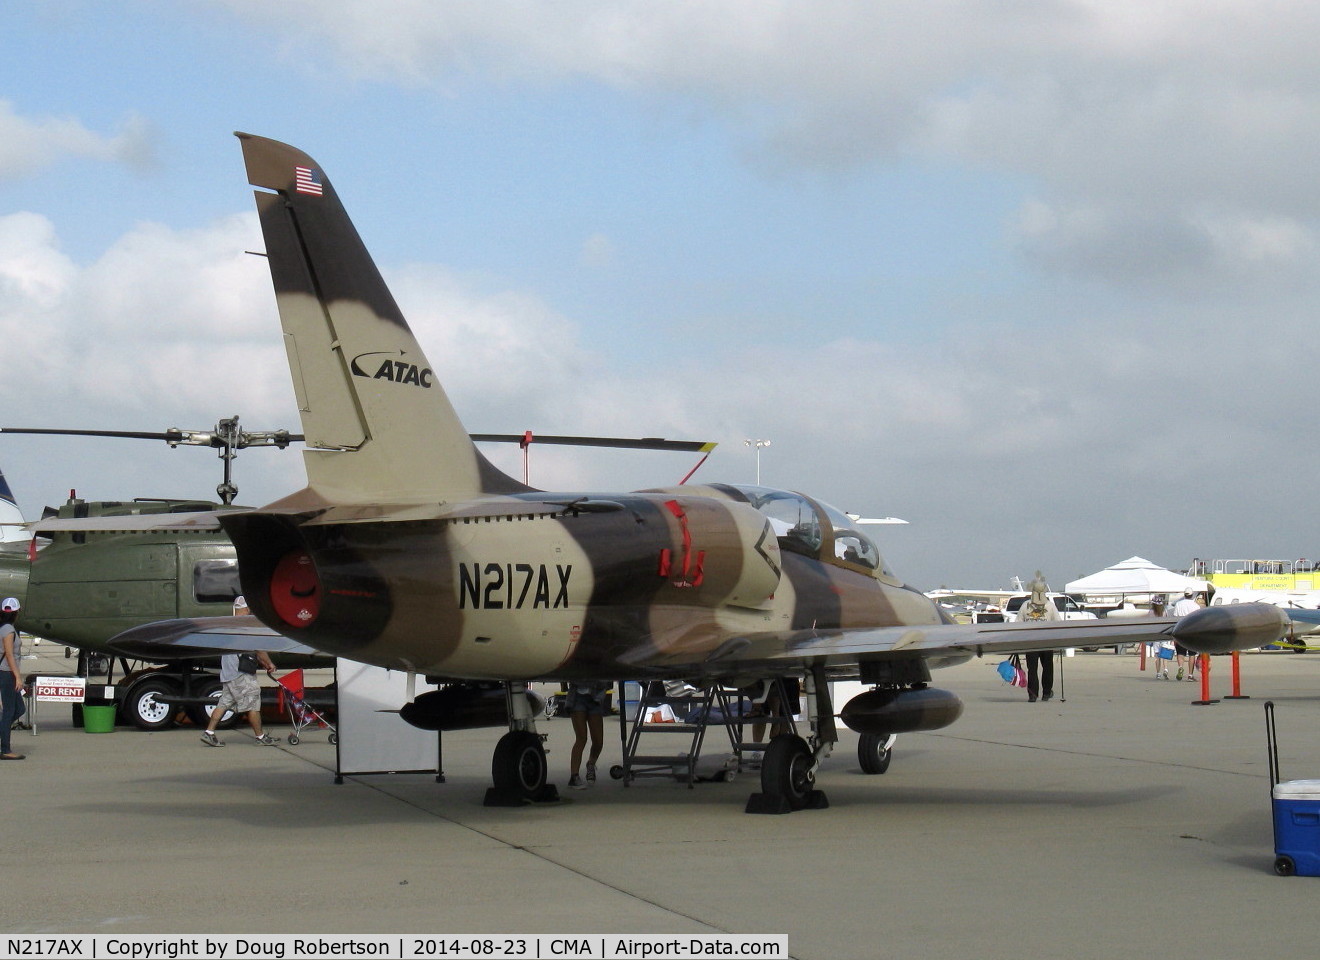 N217AX, 1983 Aero L-39ZA Albatros C/N 332632, 1983 Aero Vodochody L-39 ALBATROS, Progress (nee Ivchenko) AI-25-TL Turbofan 3,972 lb st, Experimental class